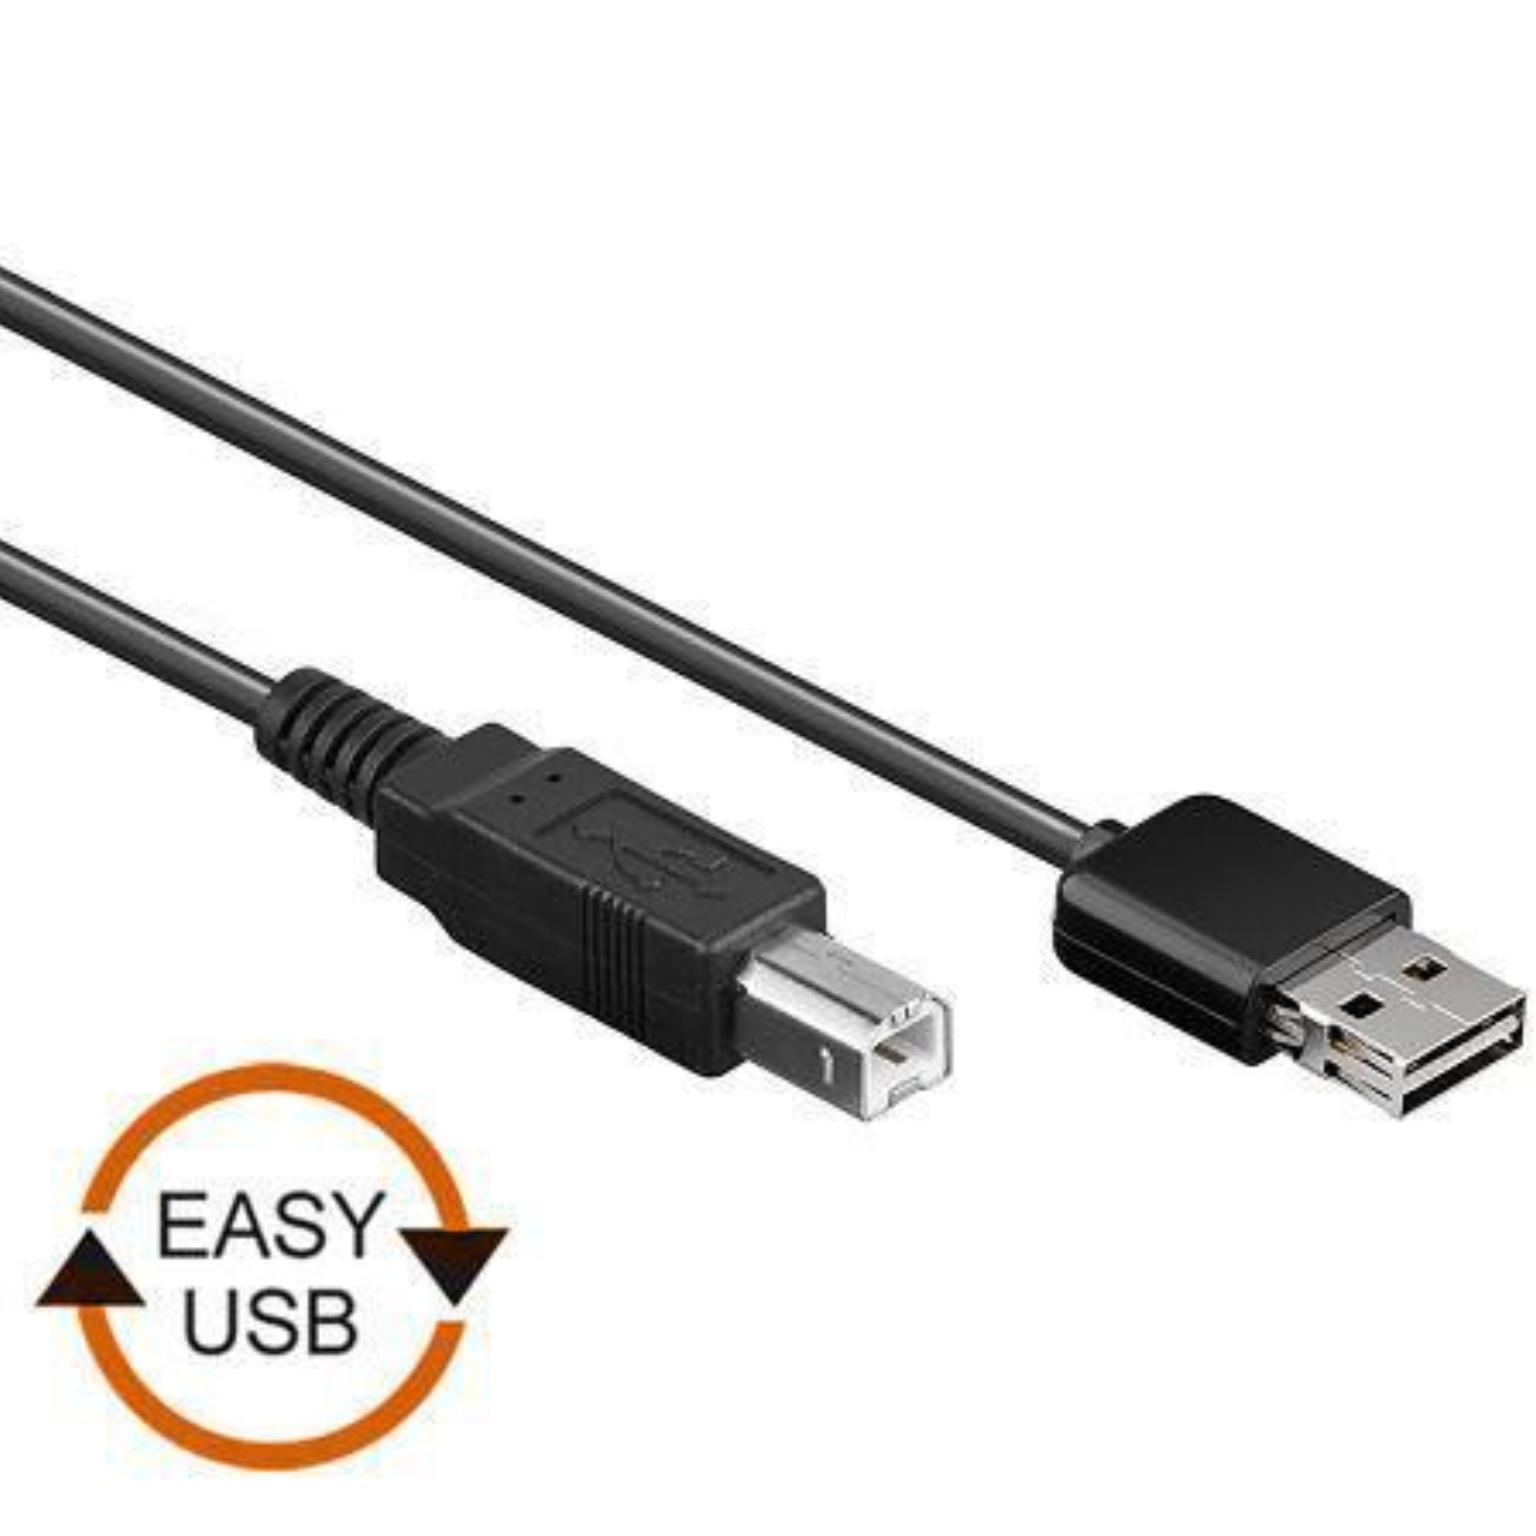 USB 2.0 kabel - Goobay